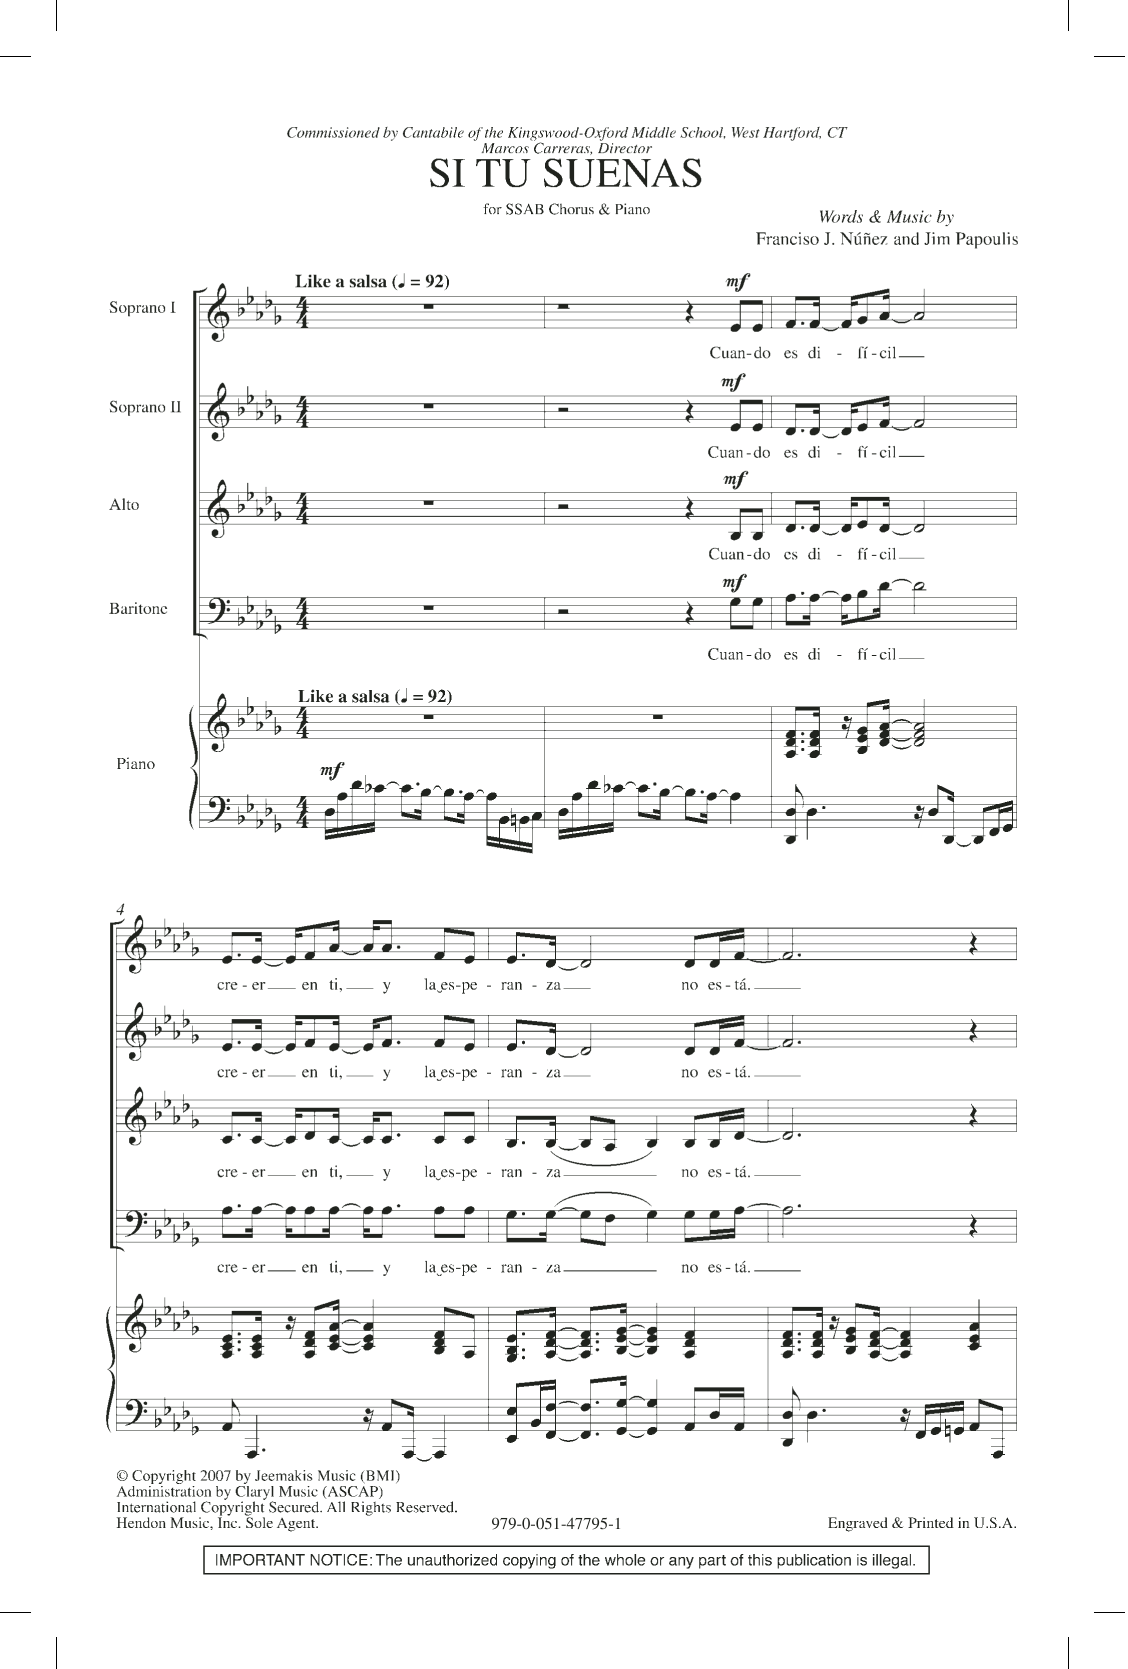 Francisco J. Nuñez Si Tu Suenas Sheet Music Notes & Chords for SATB - Download or Print PDF